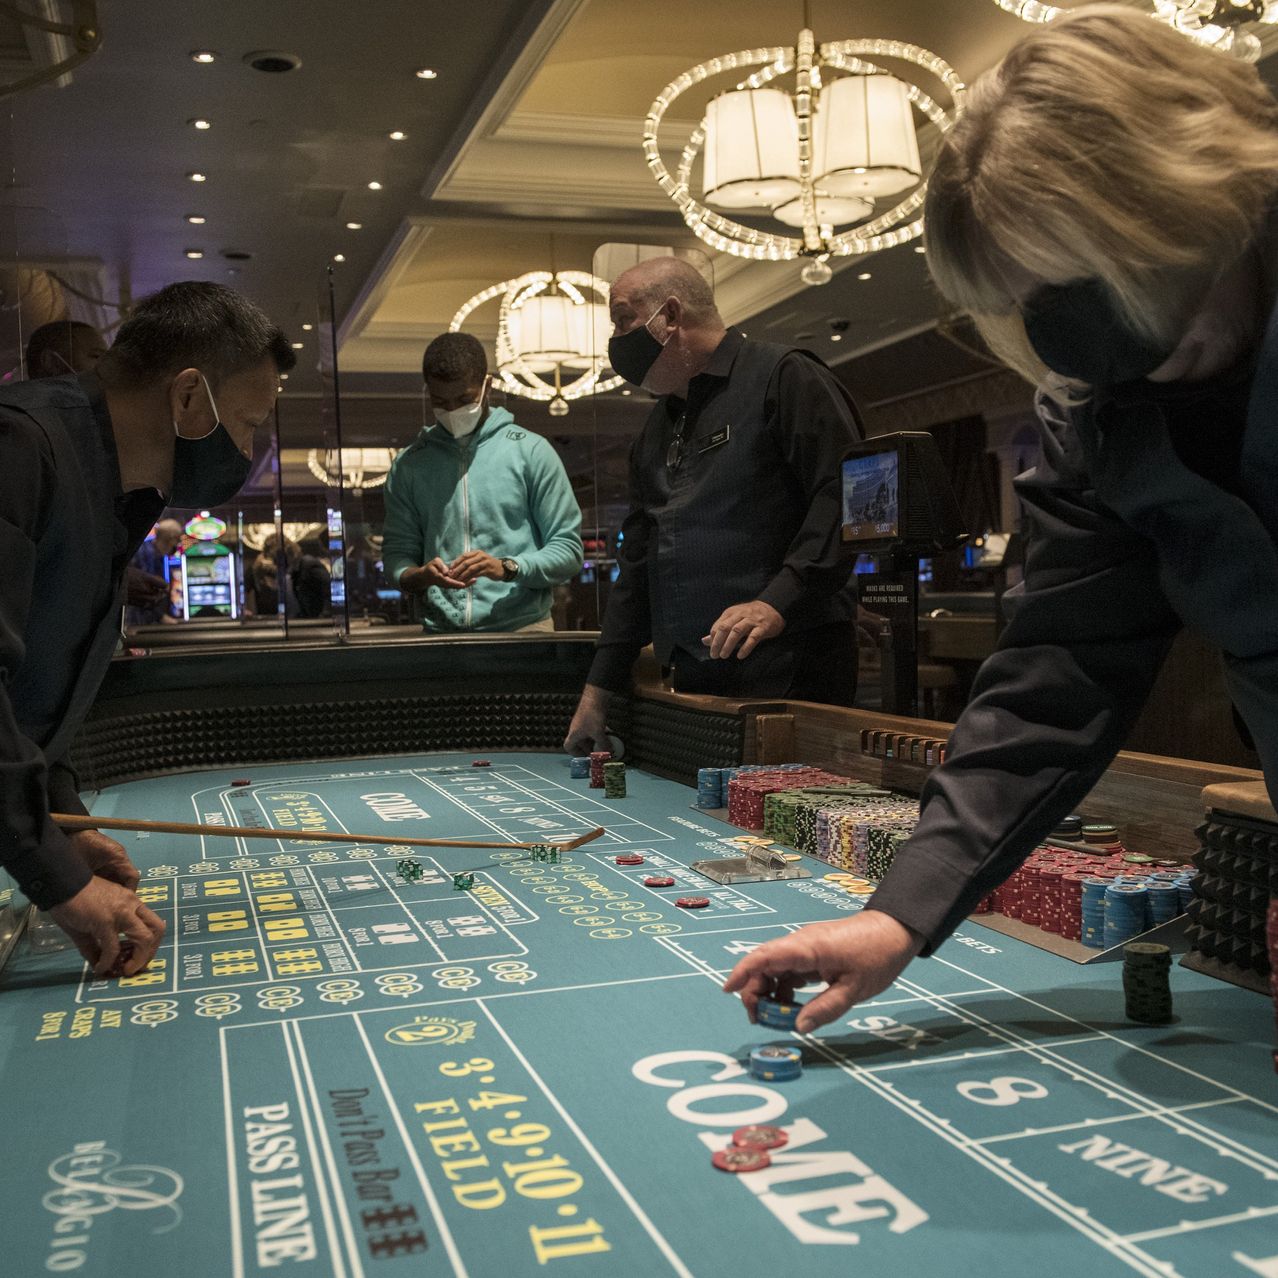 500 club casino reopen